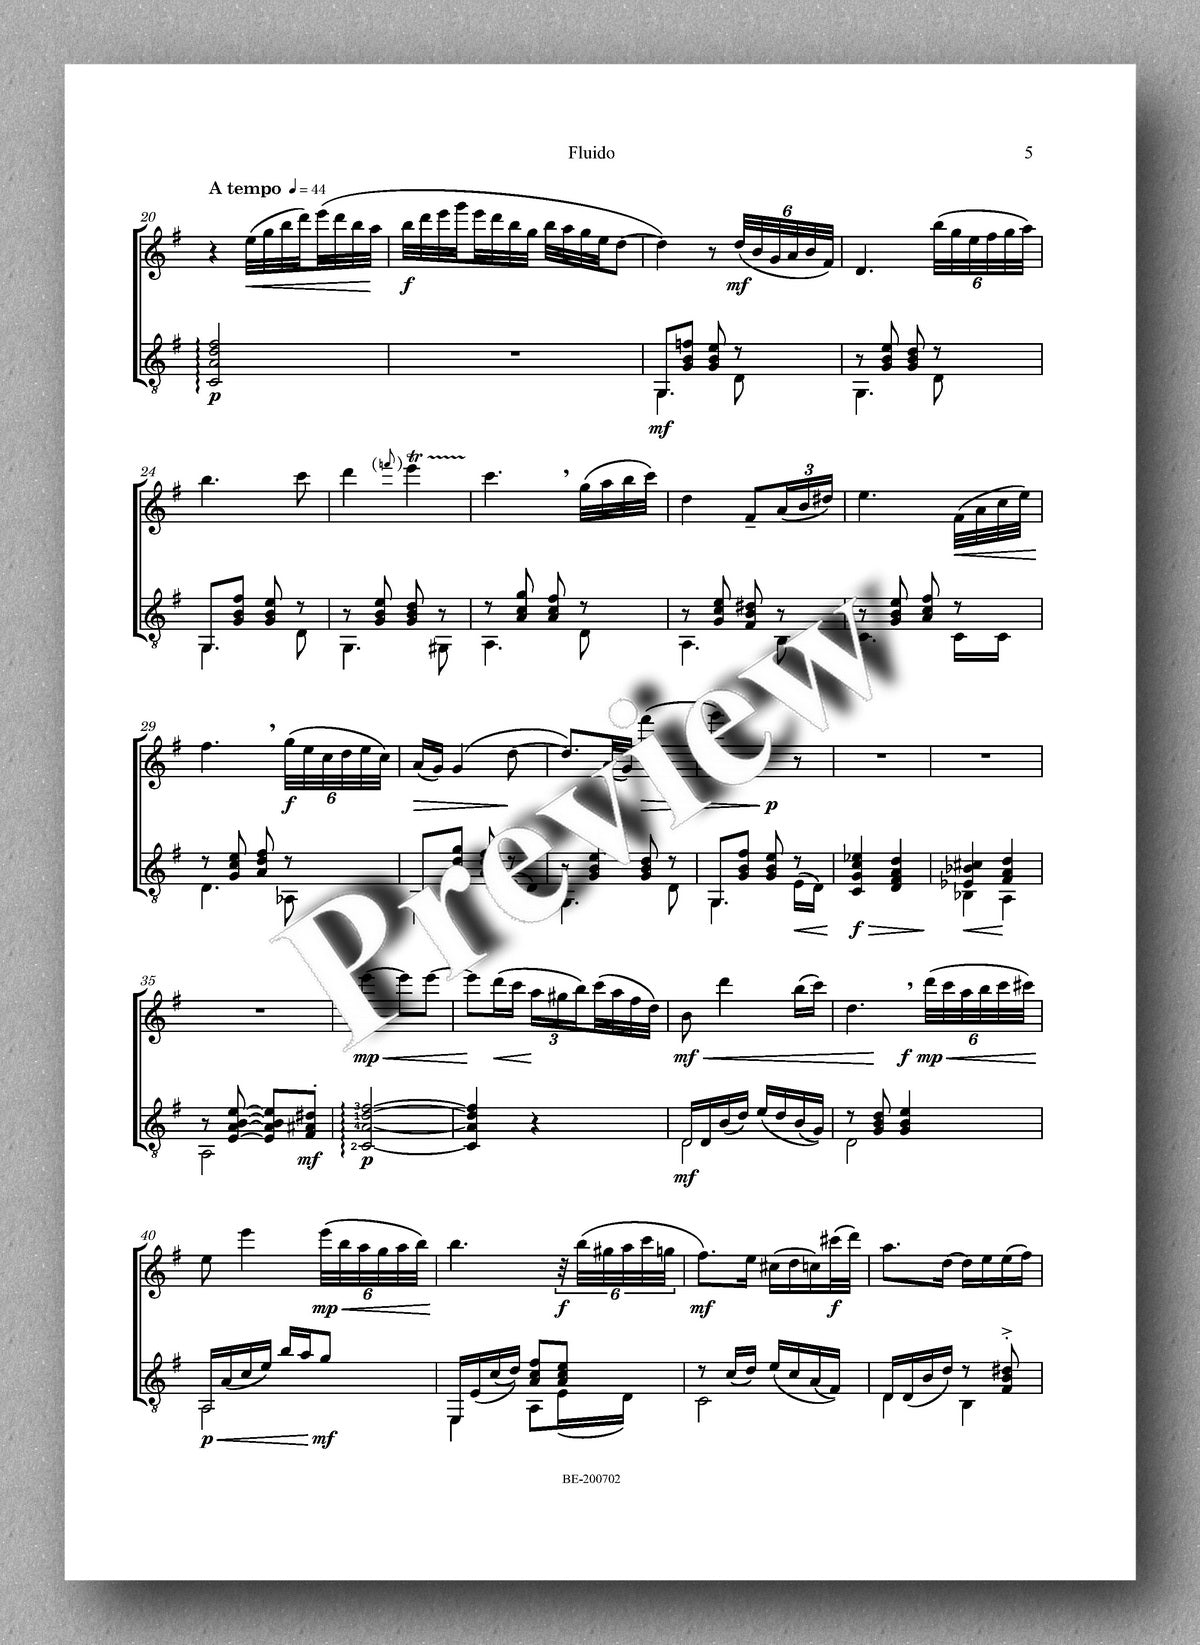 Joseph Virgilio, Fluido - preview of the music score 2